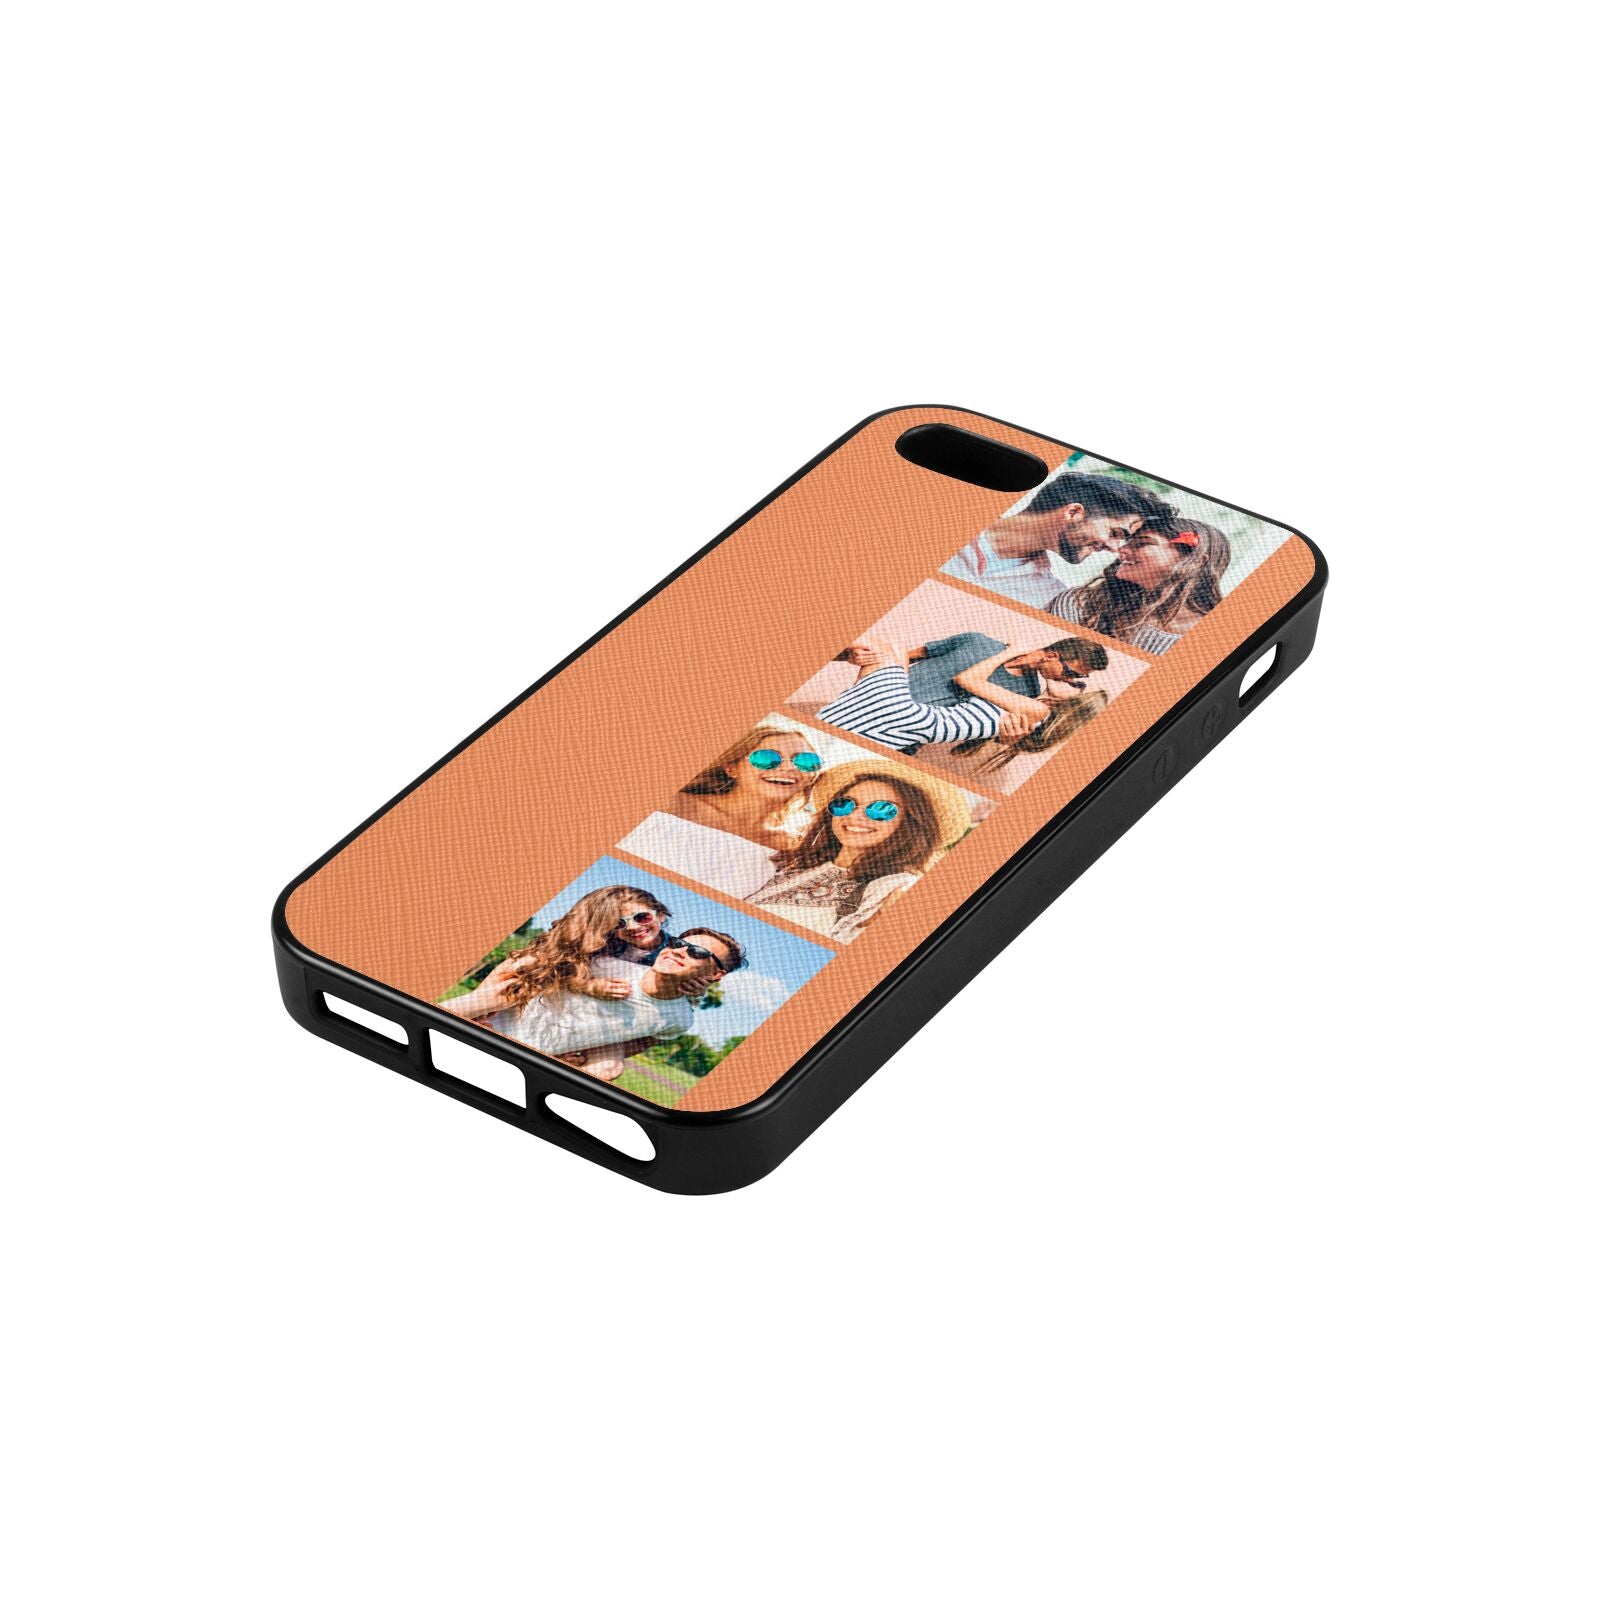 Photo Strip Montage Upload Orange Saffiano Leather iPhone 5 Case Side Angle